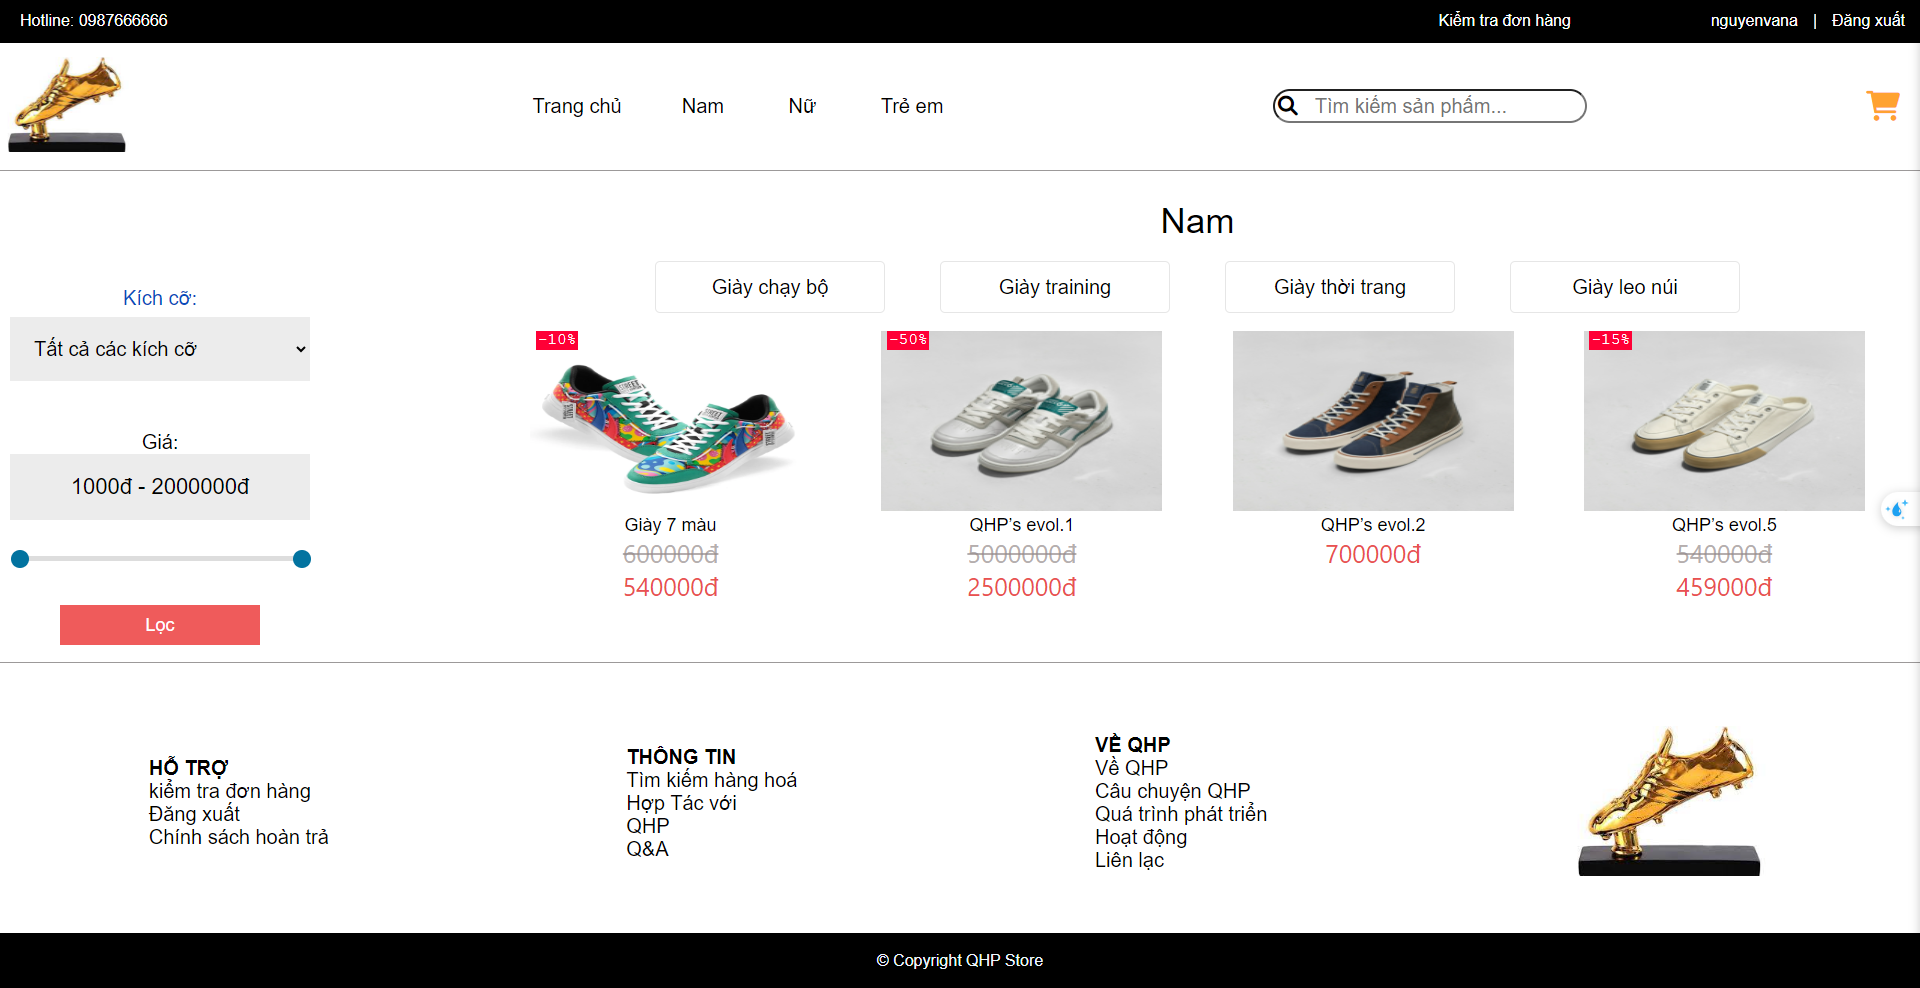 Chia sẻ Full Source code website bán giày bằng laravel 8